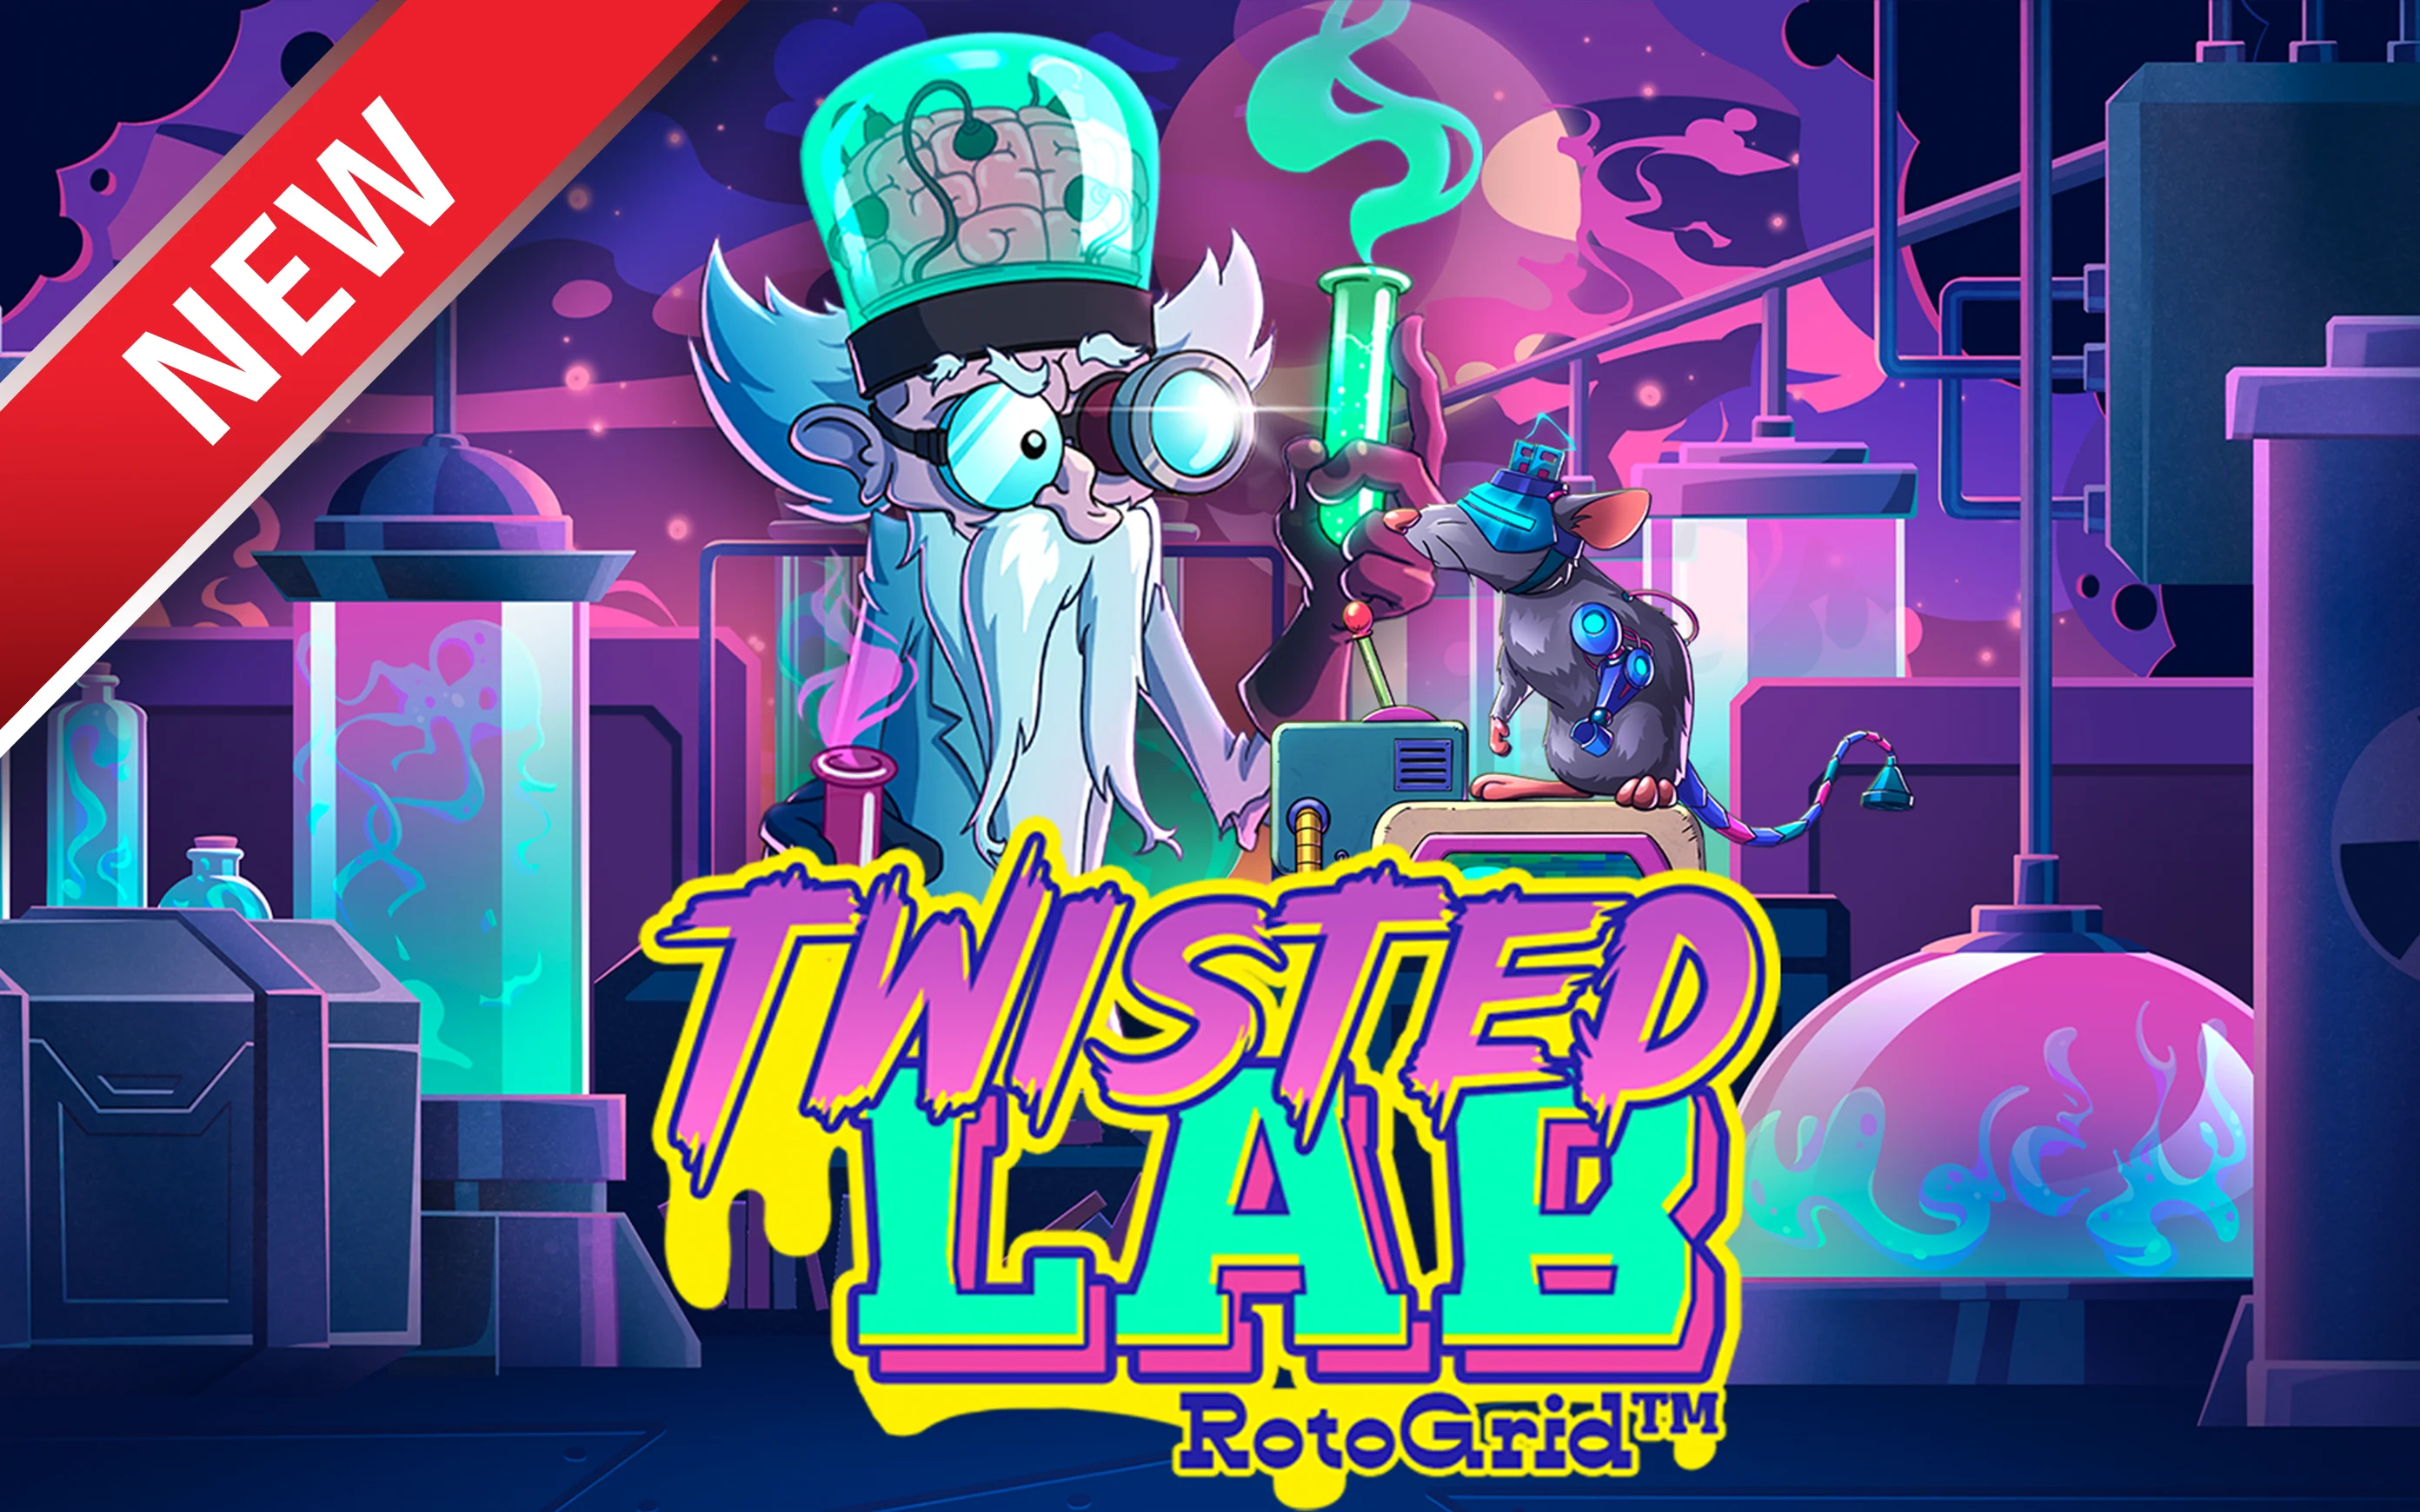 Joacă Twisted Lab în cazinoul online Starcasino.be